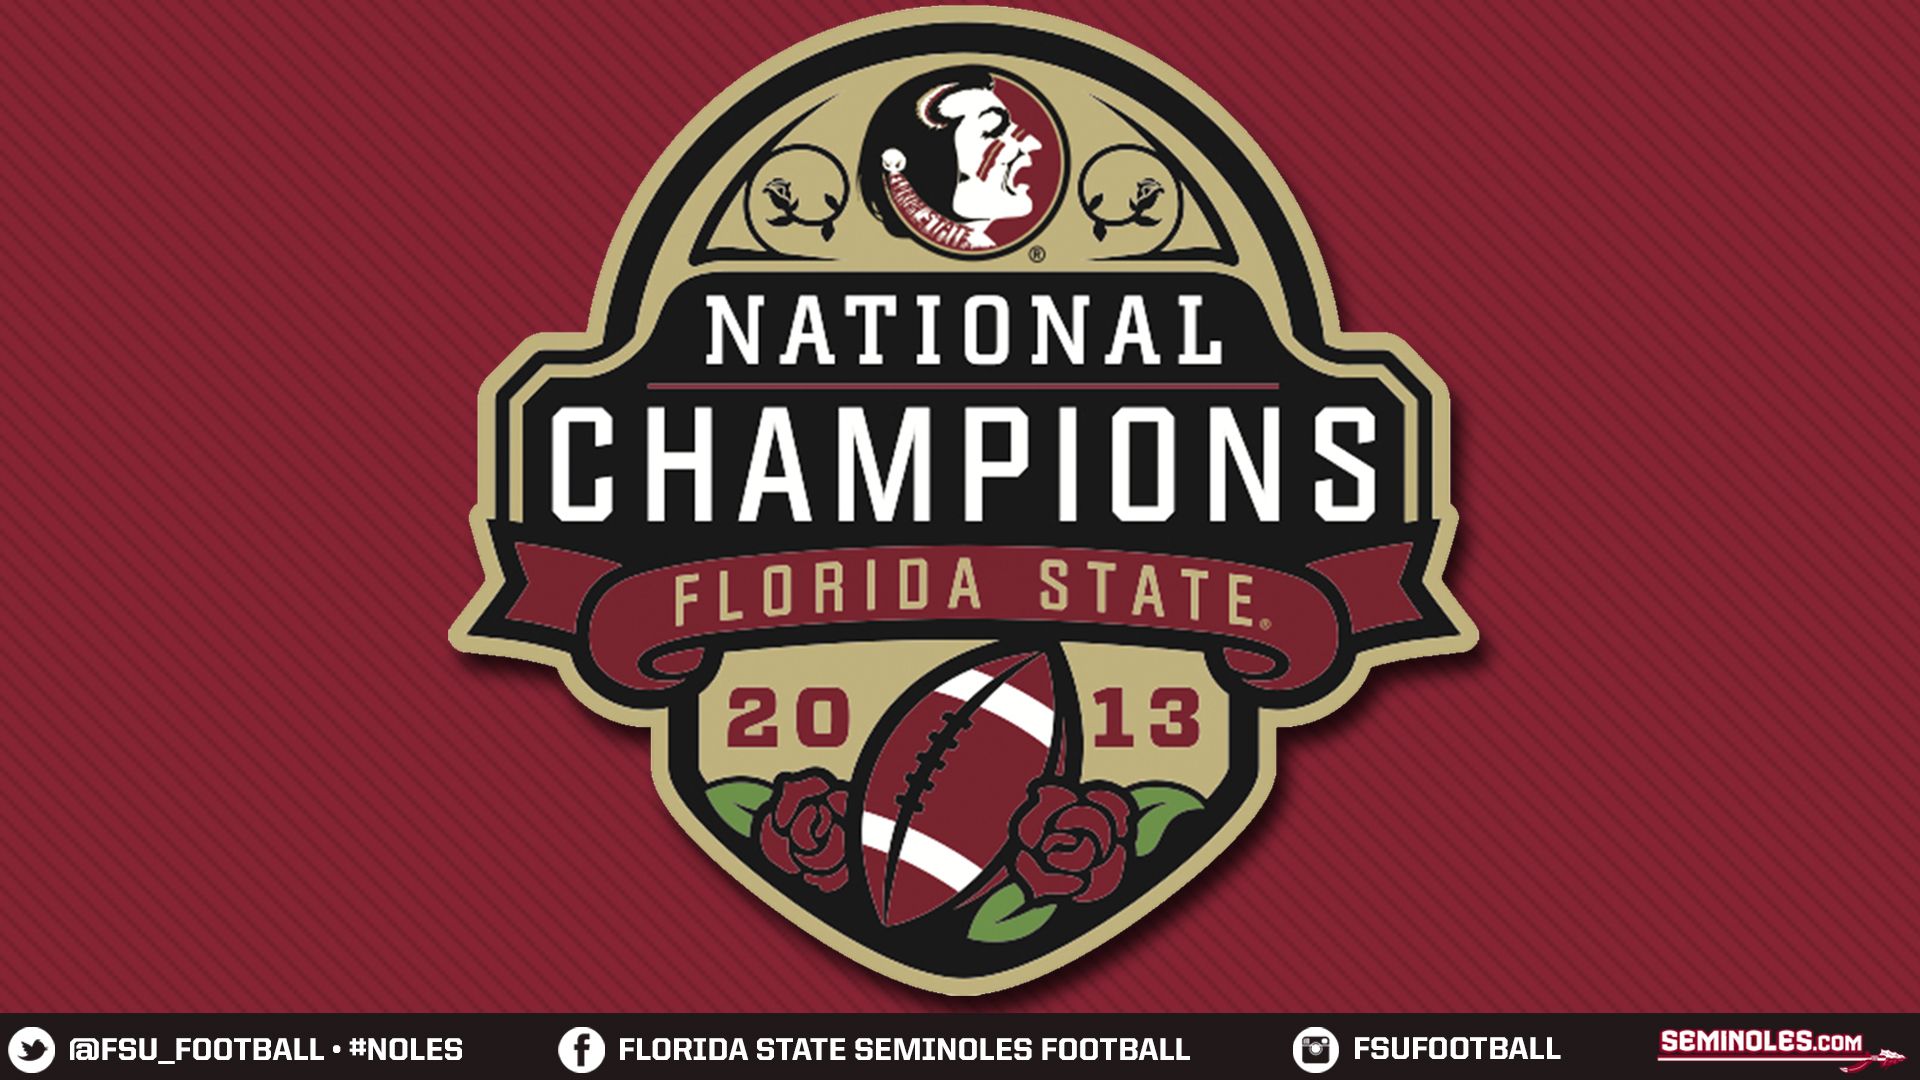 genrel_wallpaper - Florida State Seminoles Official Athletic Site